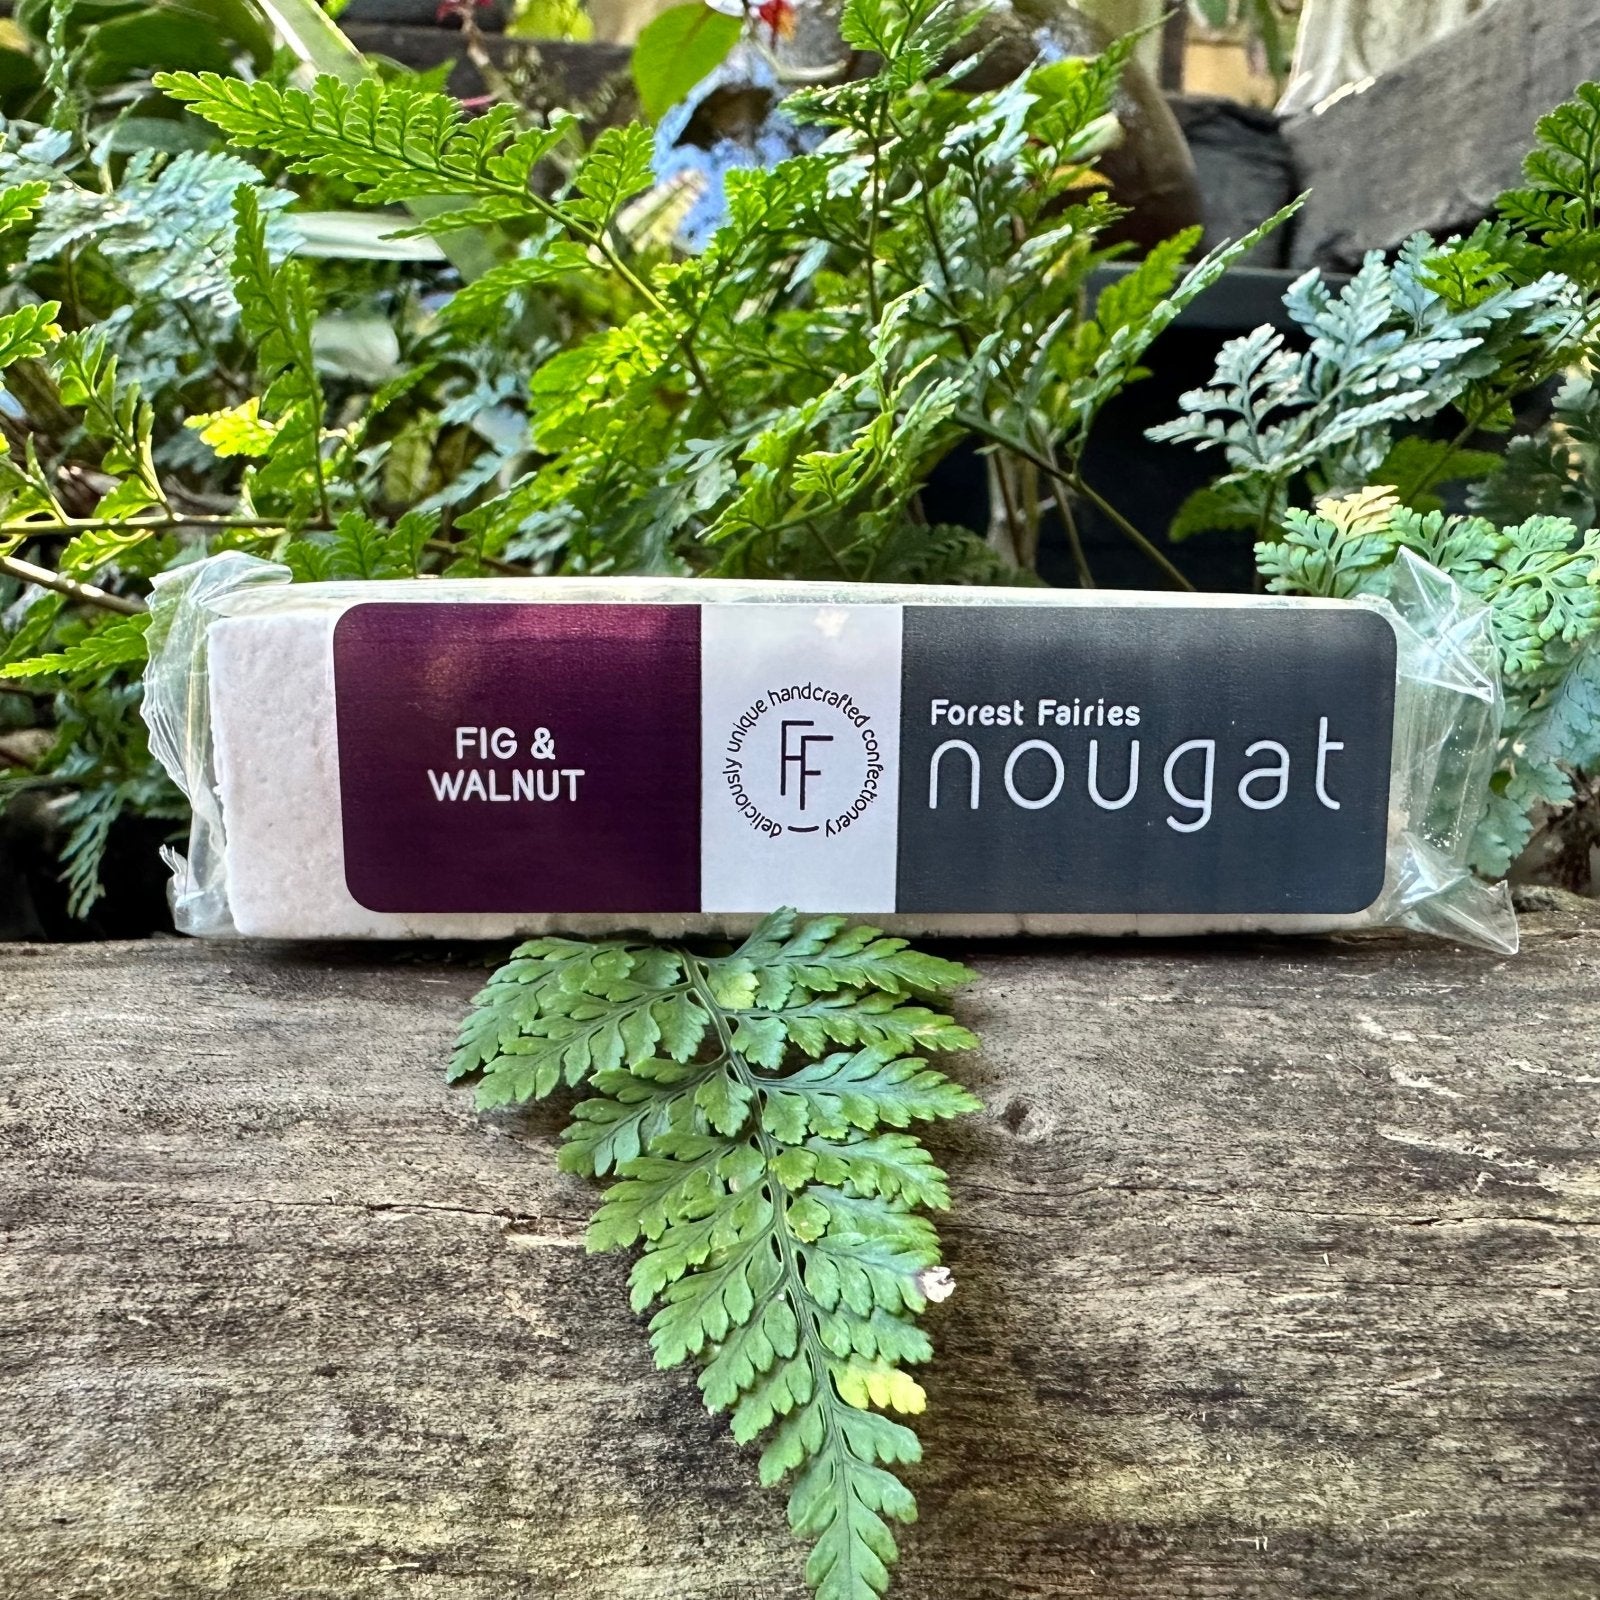 Forest Fairies Nougat - Fig & Walnut (50g) - The Deli